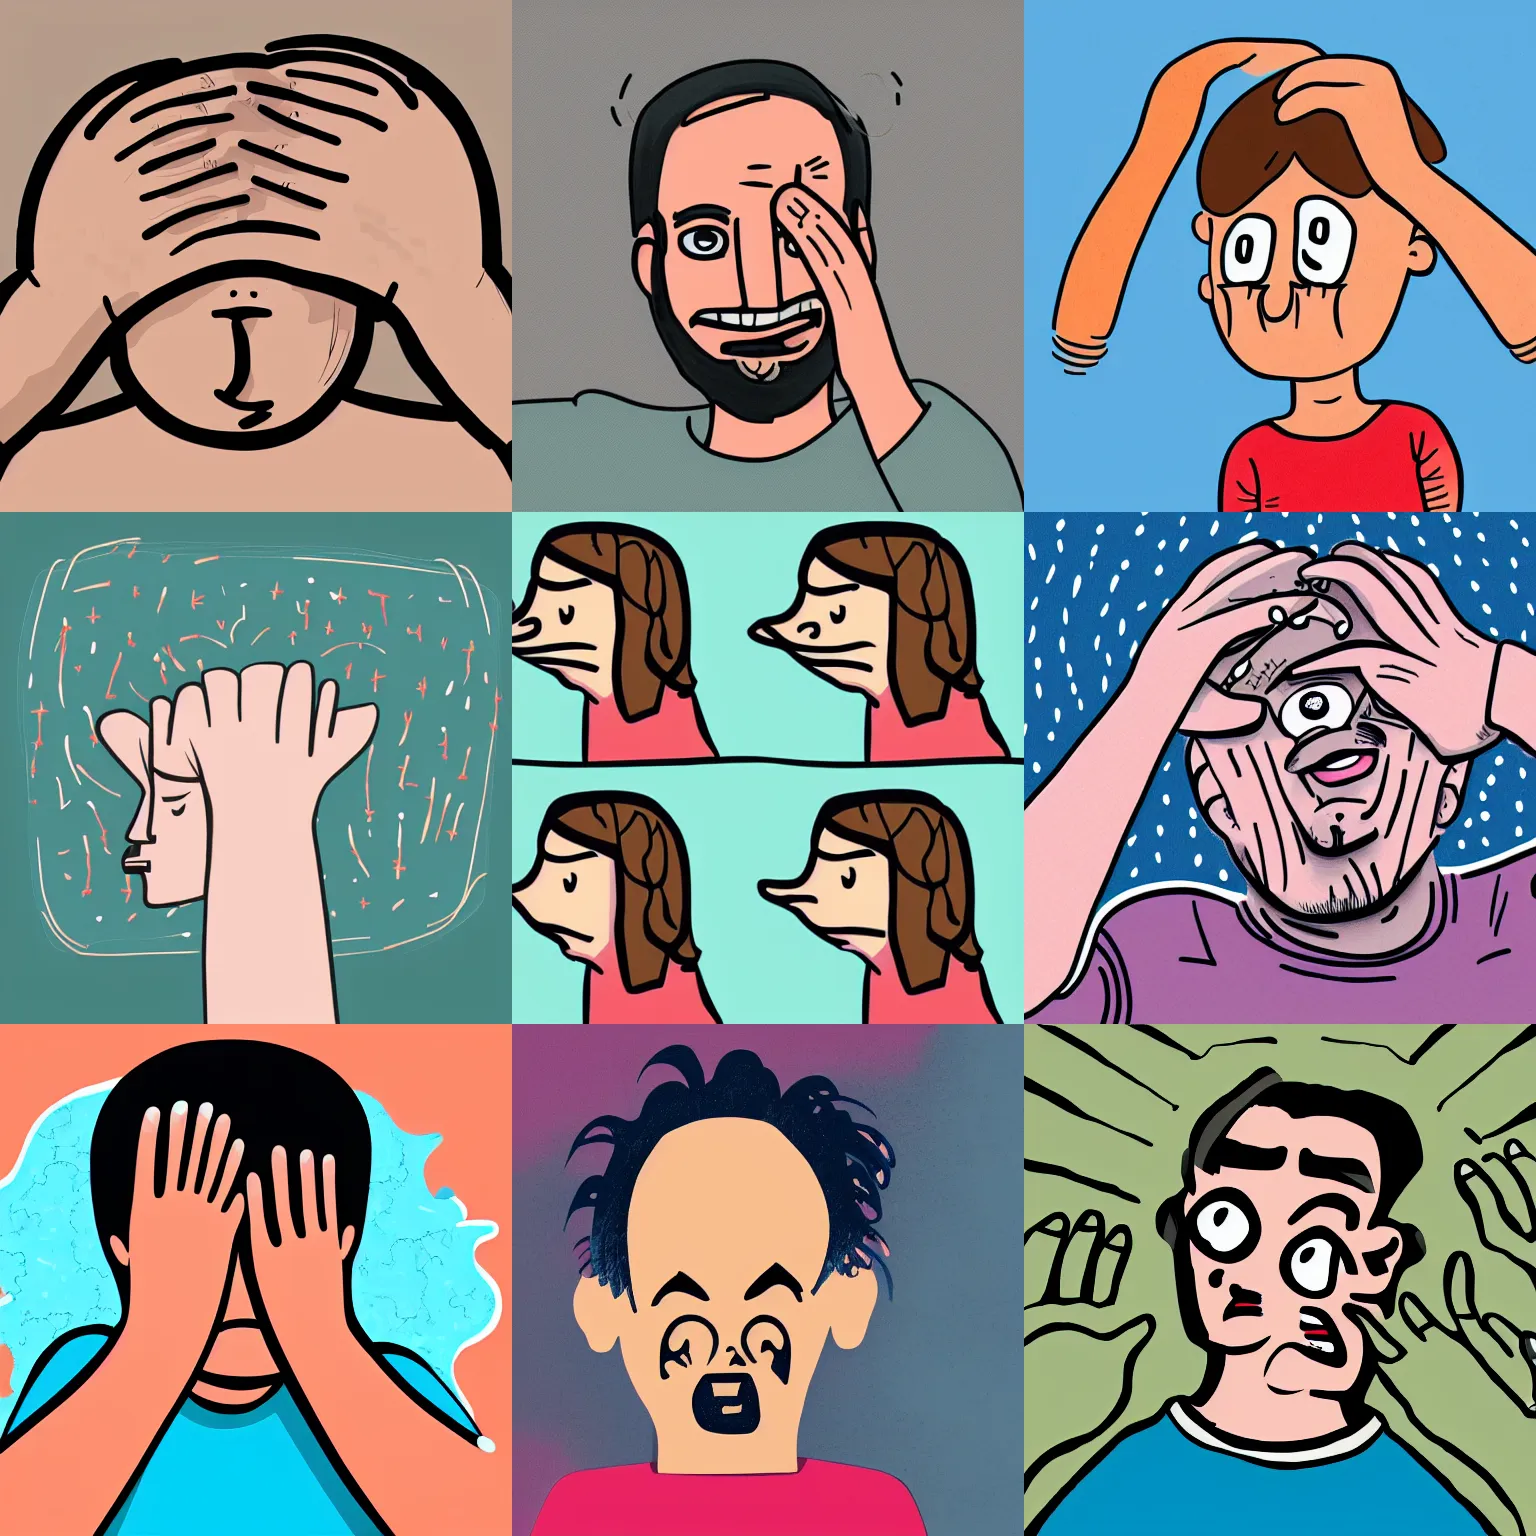 Prompt: hands on face, scratching head, cartoon, digital illustration